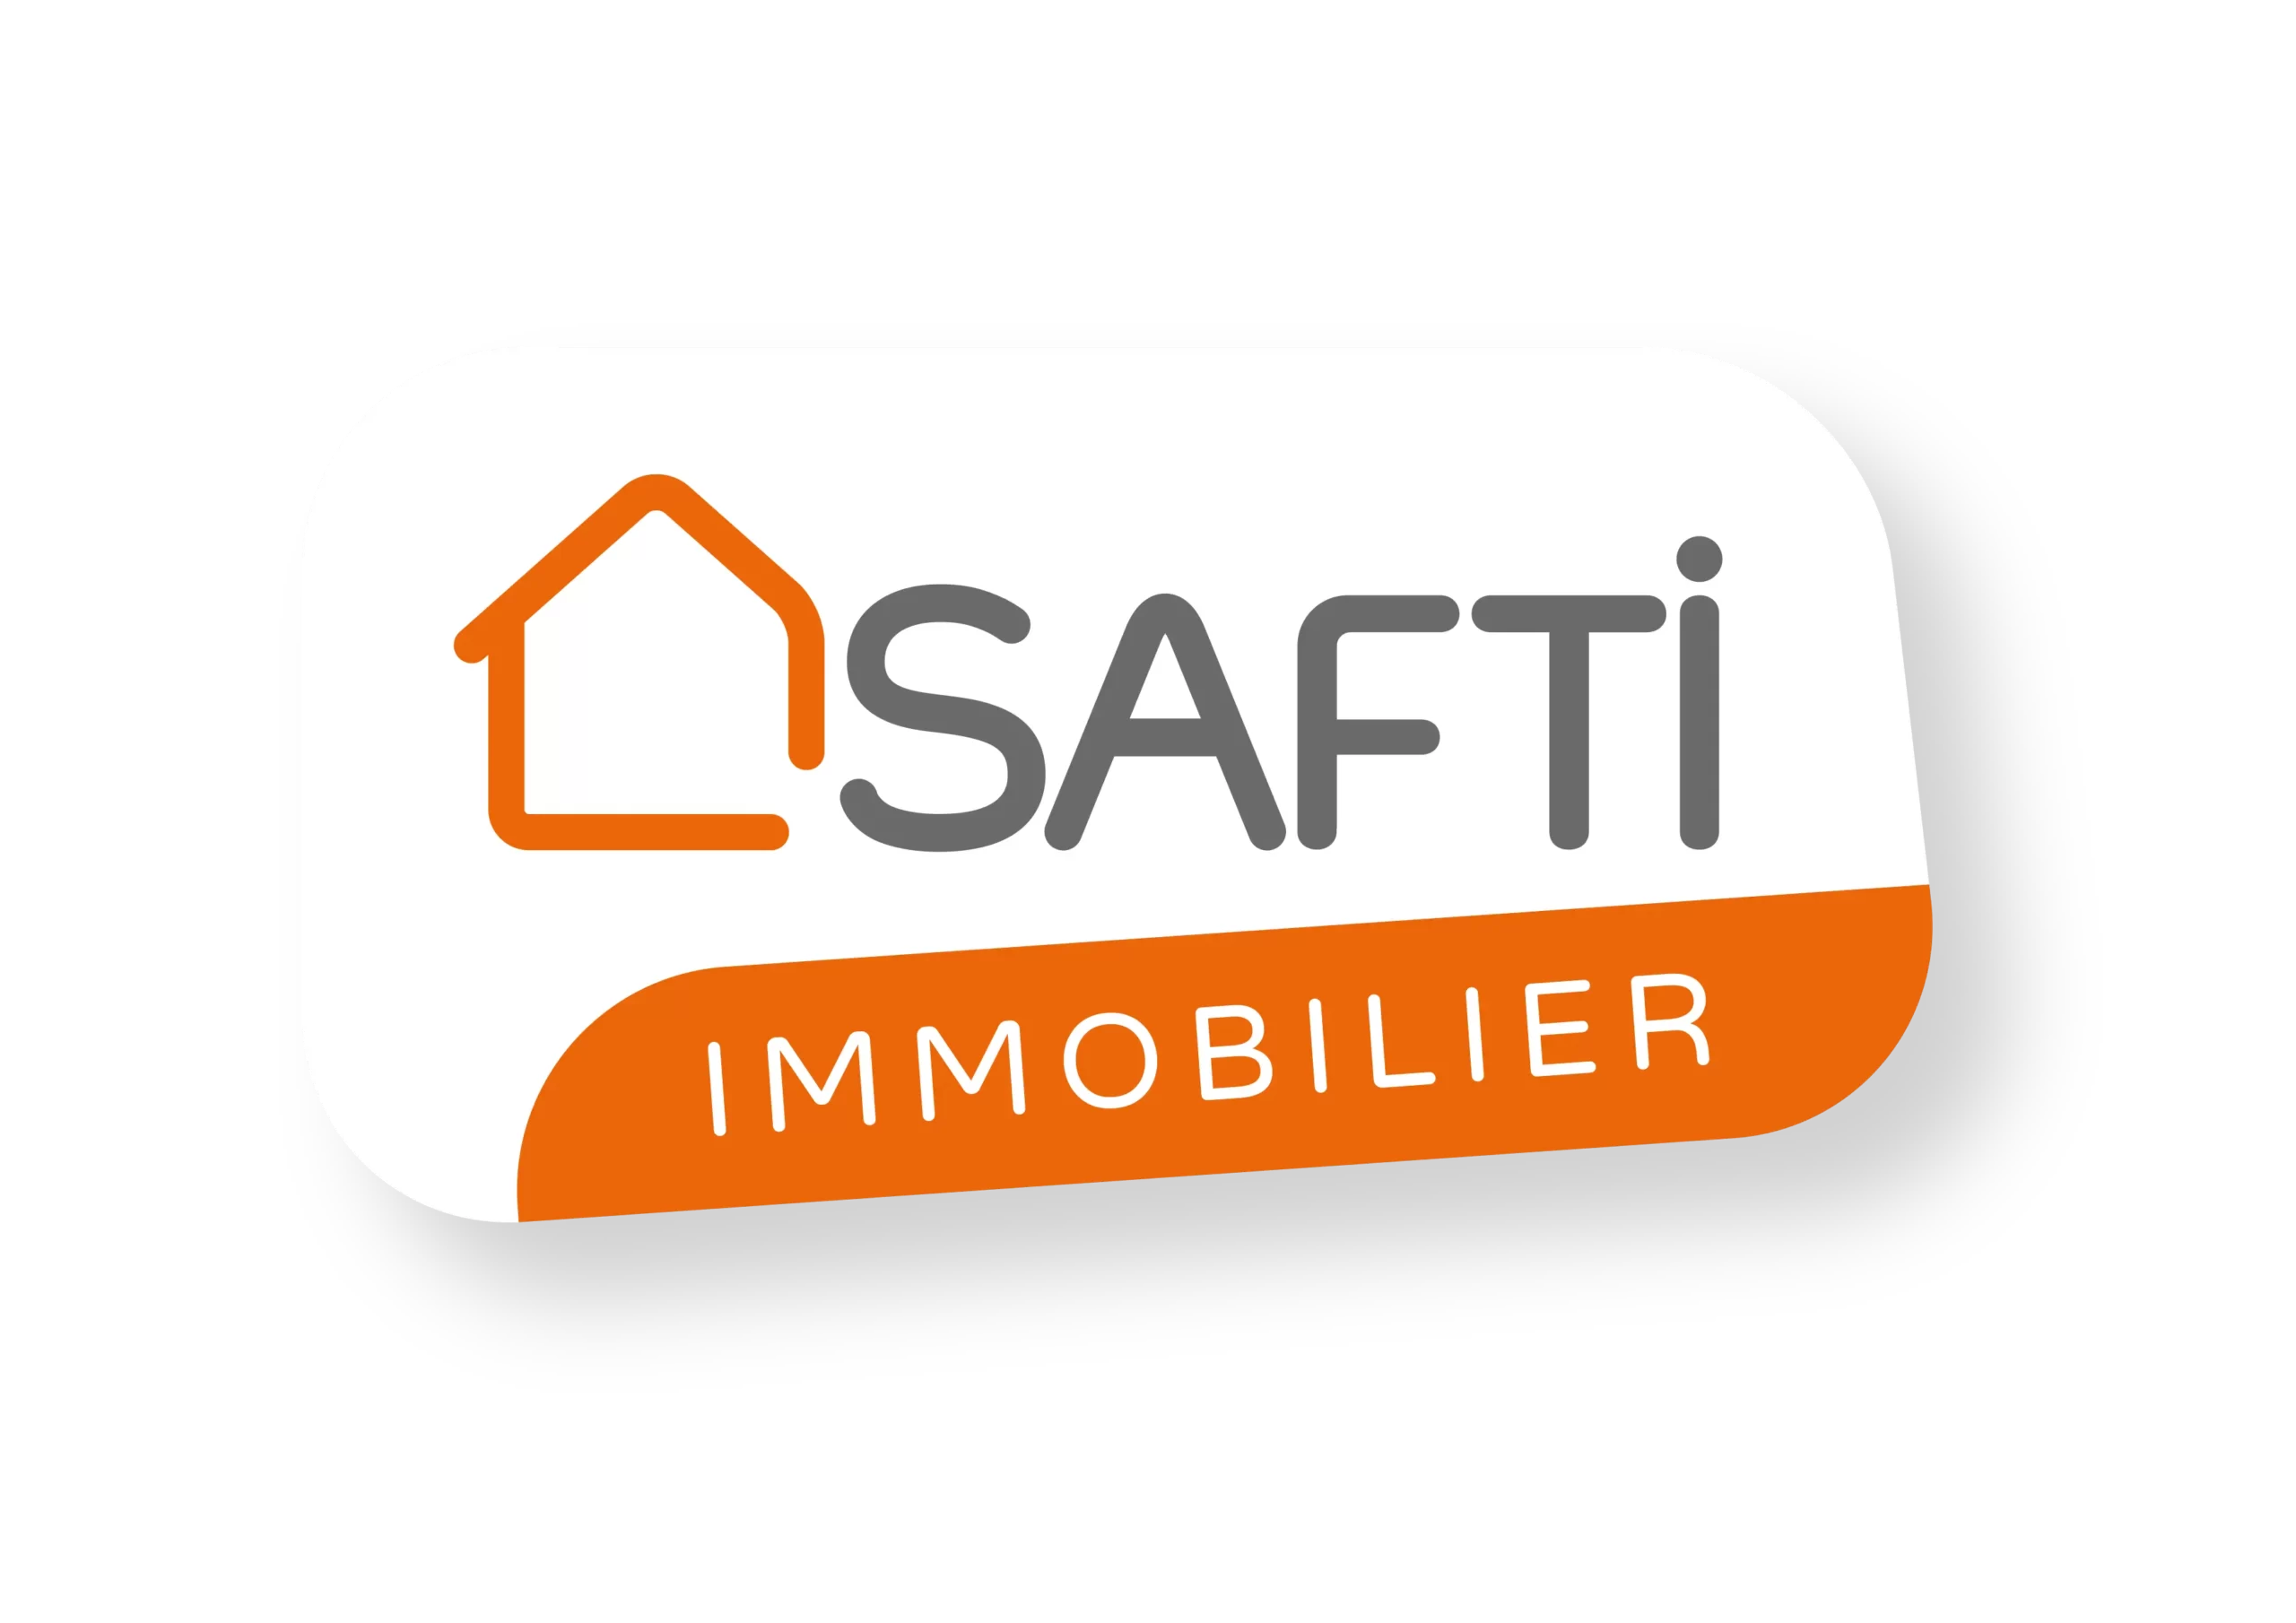 Logo SAFTI